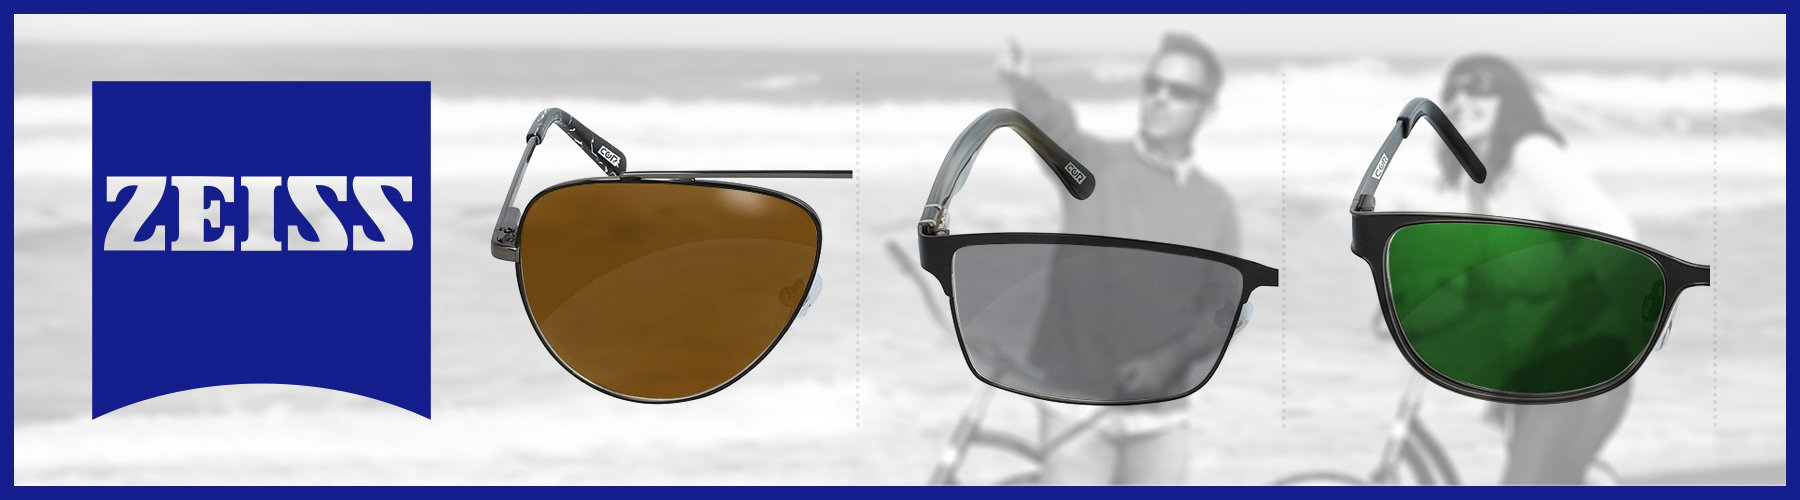 Zeiss sunglass lenses for sale online